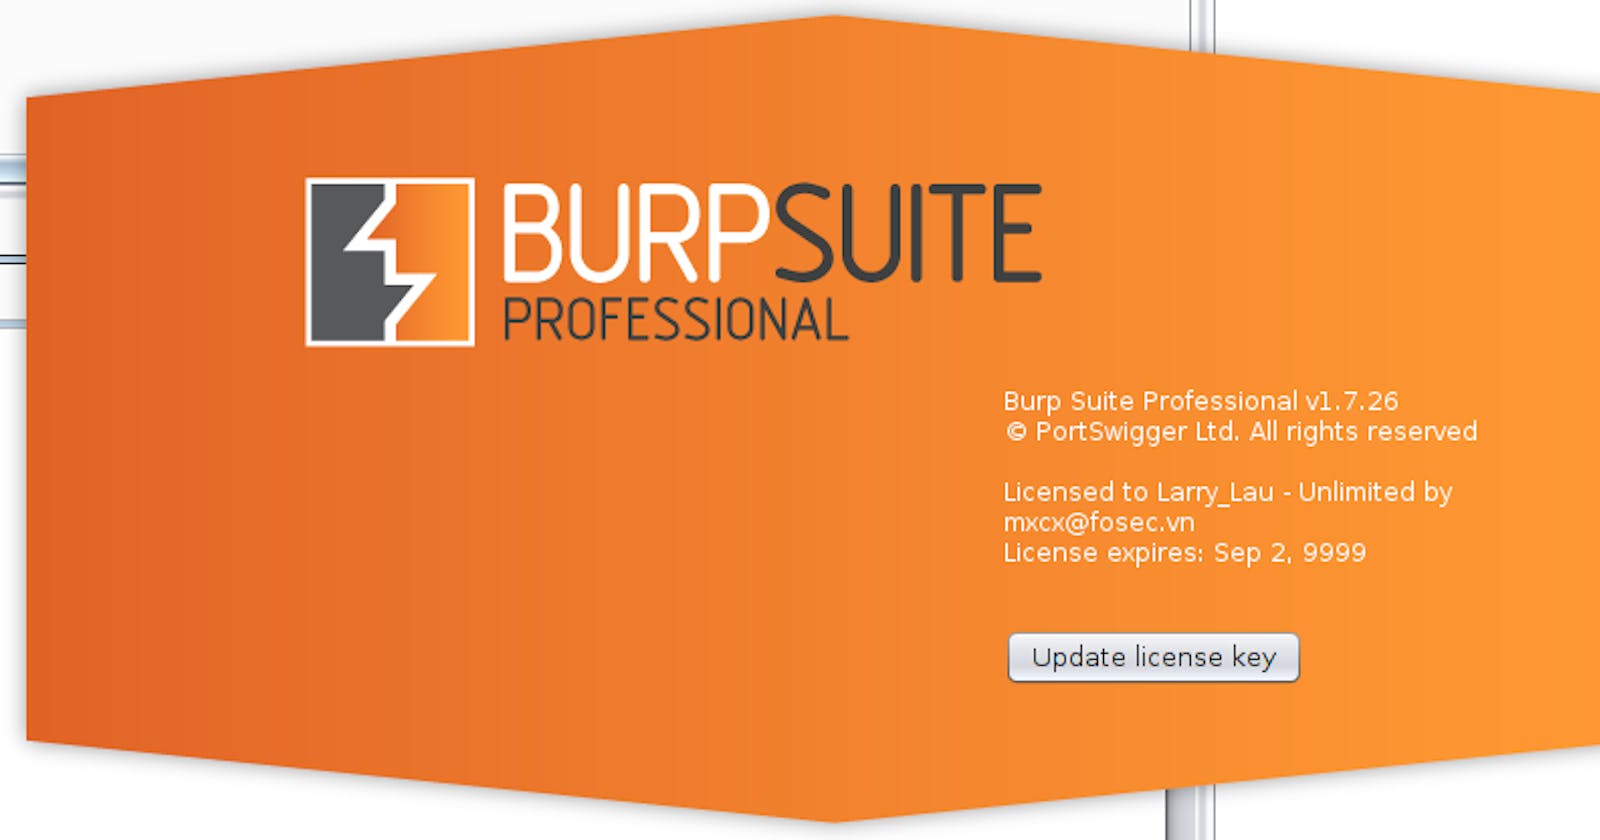 BurpUnlimited — Just extends BurpLoader’s license